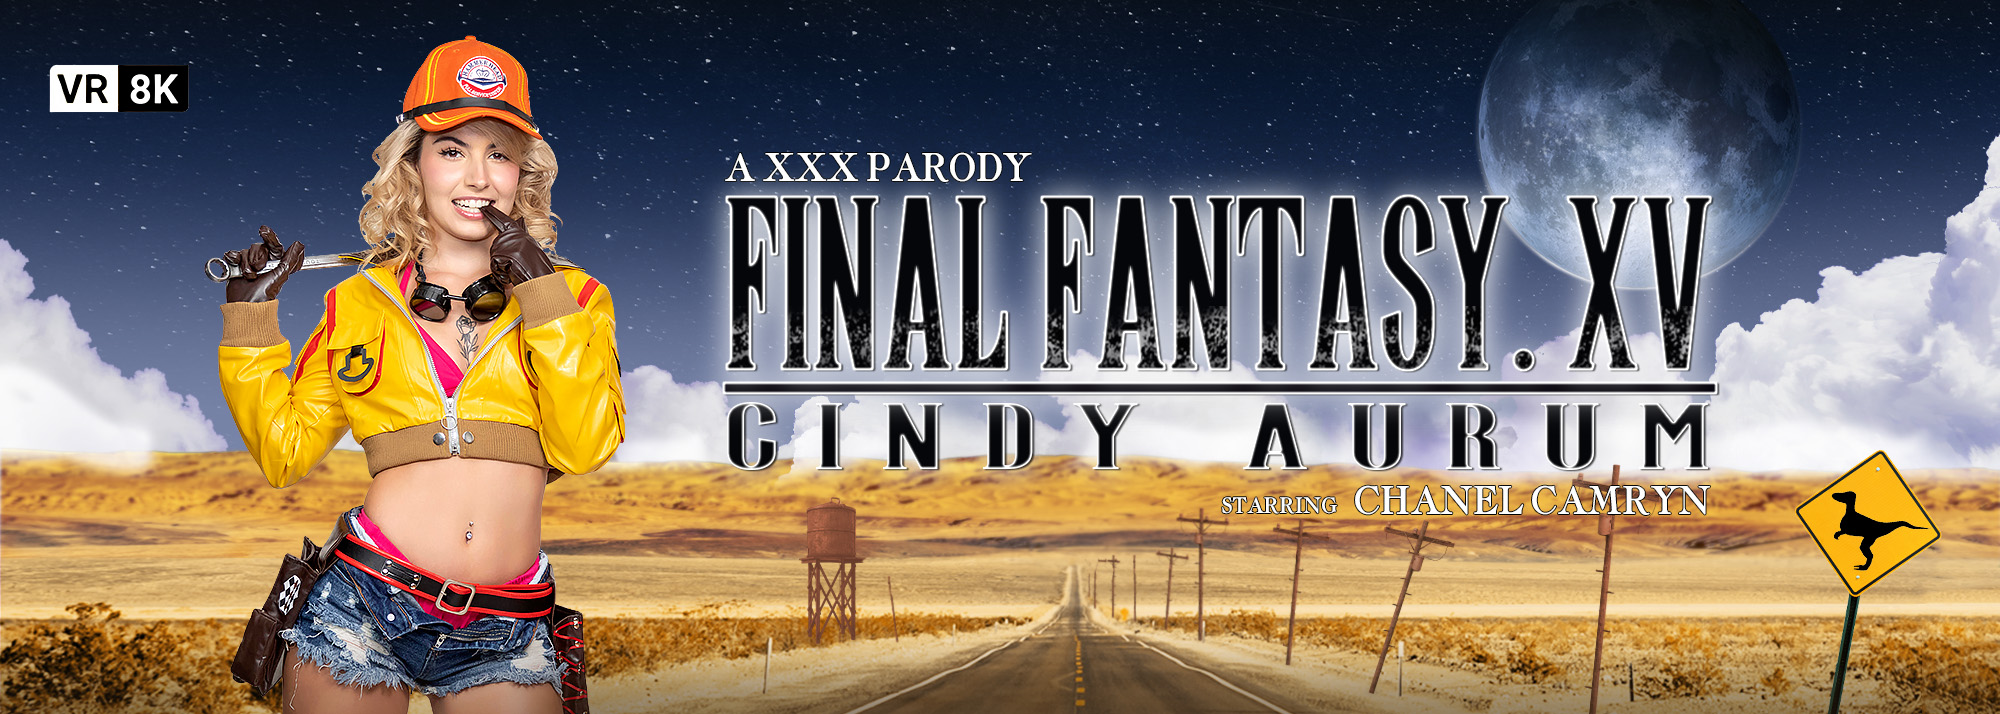 Final Fantasy XV: Cindy Aurum (A Porn Parody) - VR Porn Video, Starring: Chanel Camryn VR